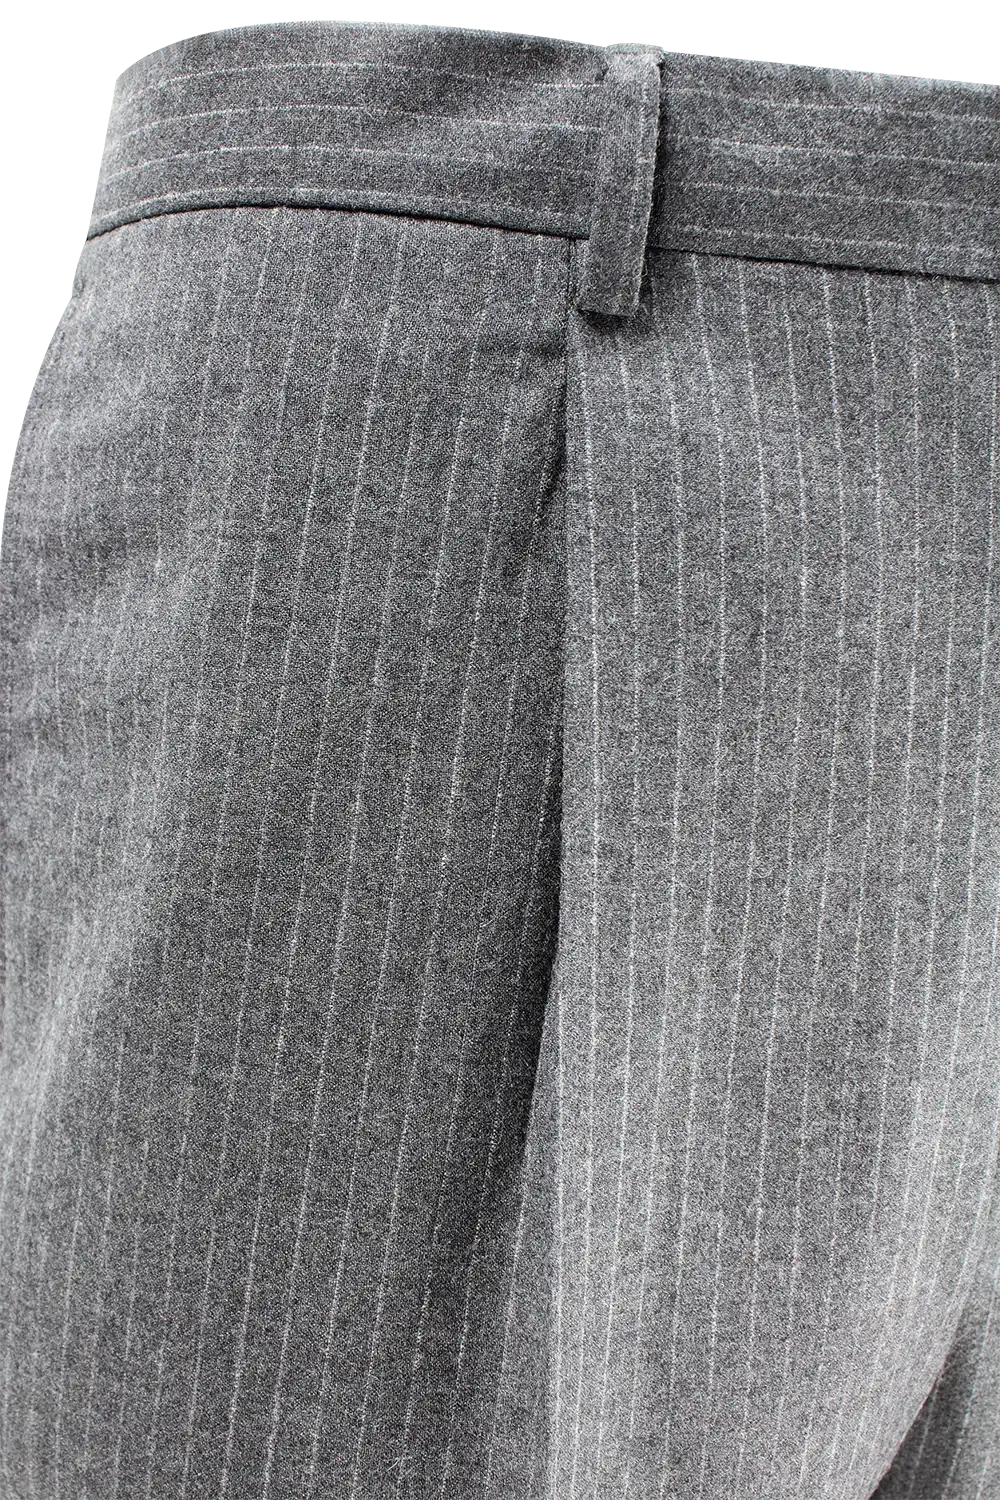 Pantalone con pince in lana antracite gessata pince